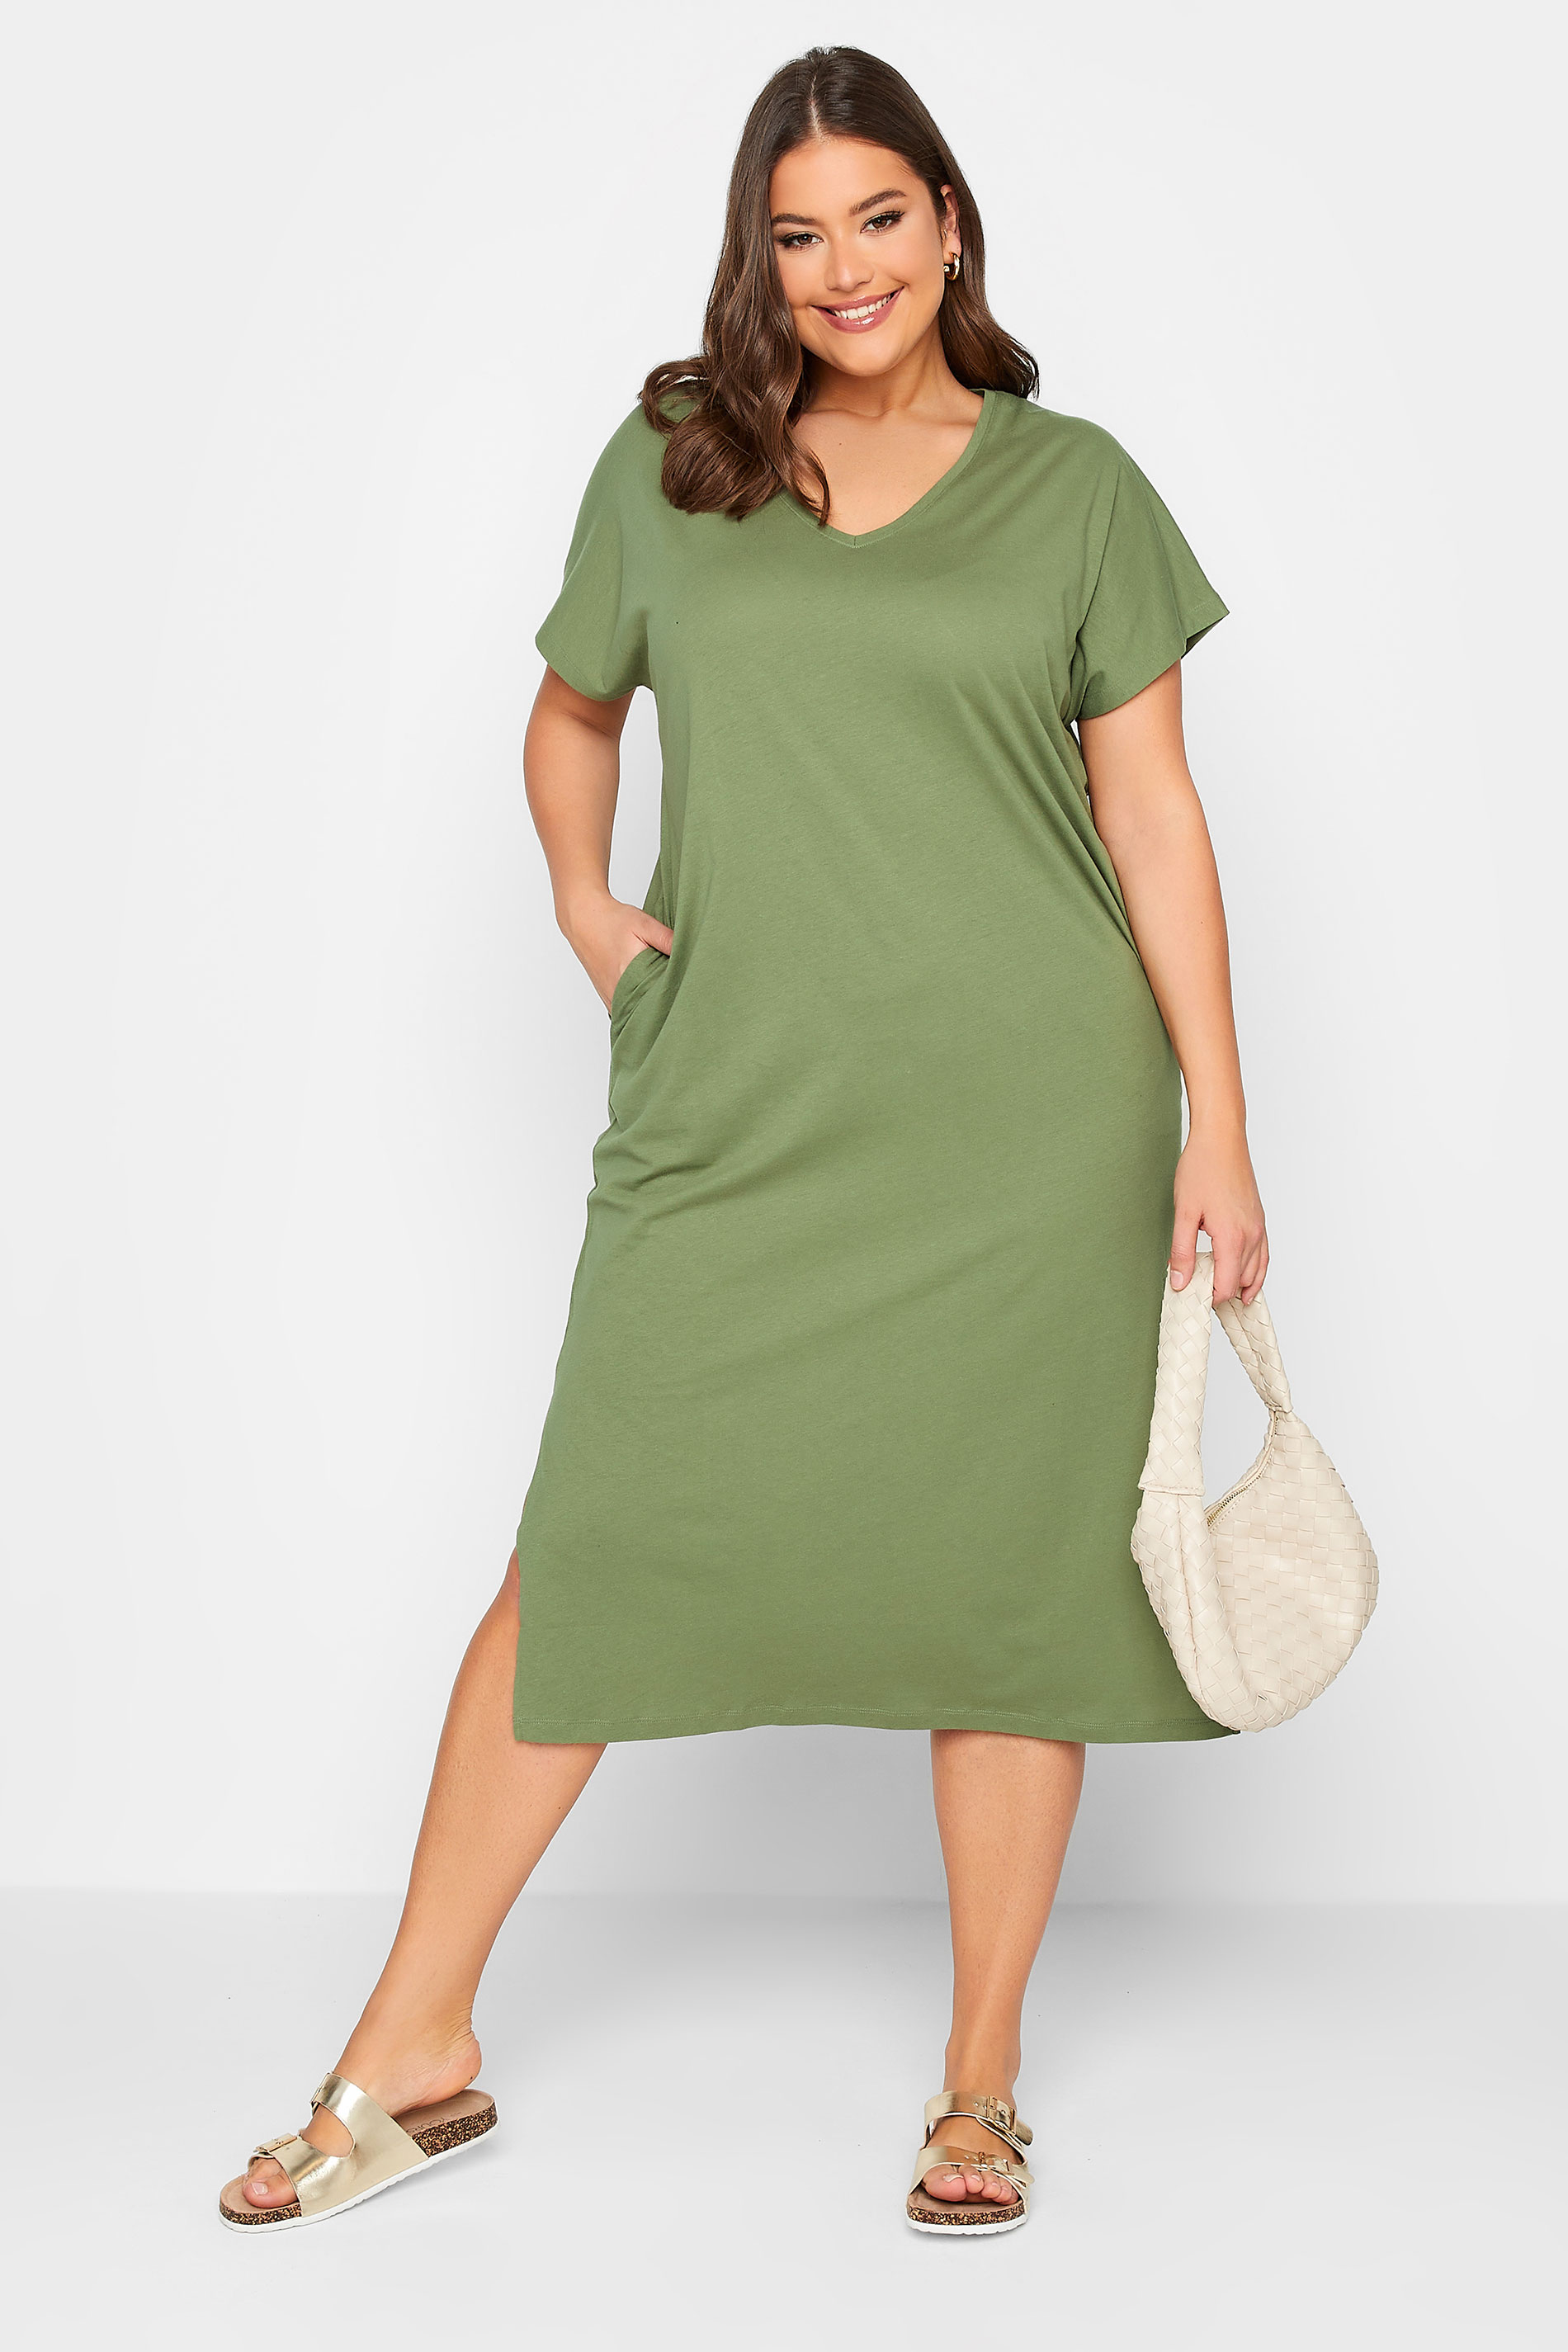 YOURS Plus Size Khaki Green Side Split Midaxi T-Shirt Dress | Yours Clothing 2